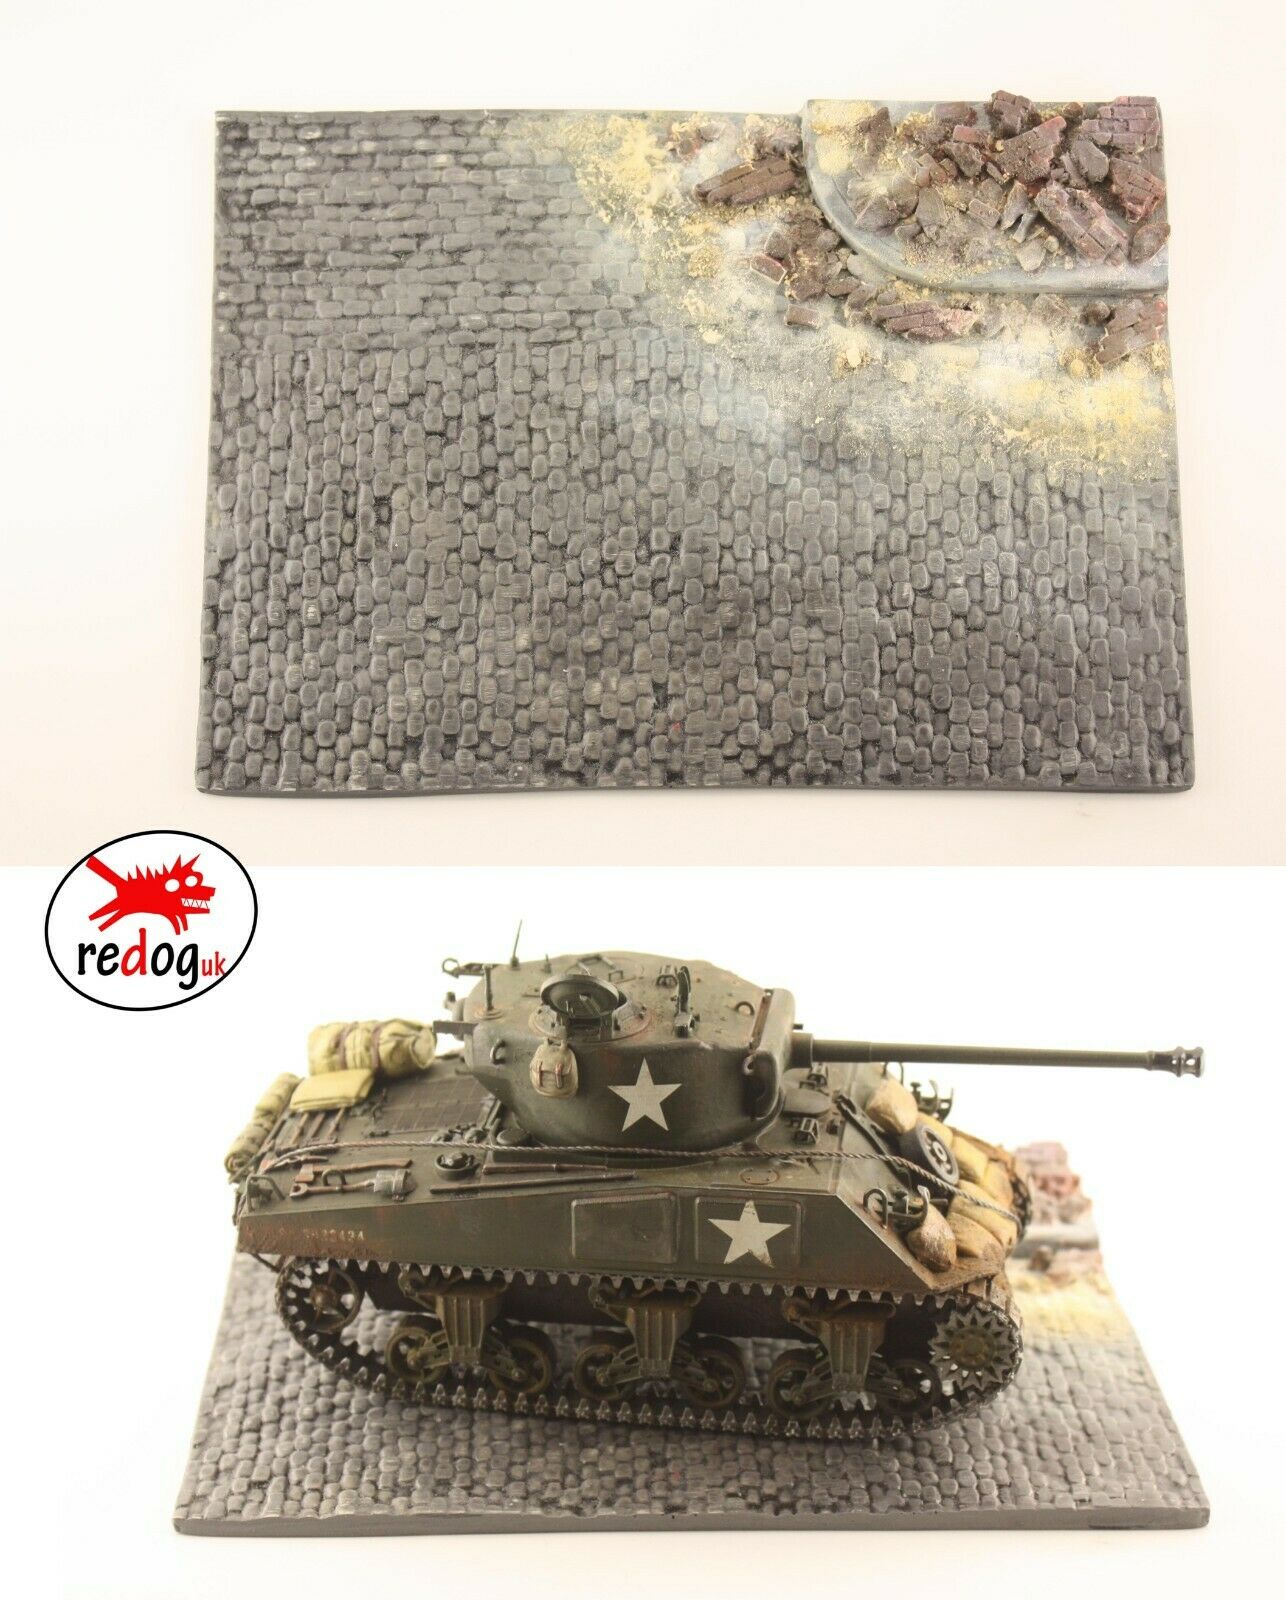 Redog 1/35 Military Scale Model Vehicle & Tank Display Diorama Base - redoguk